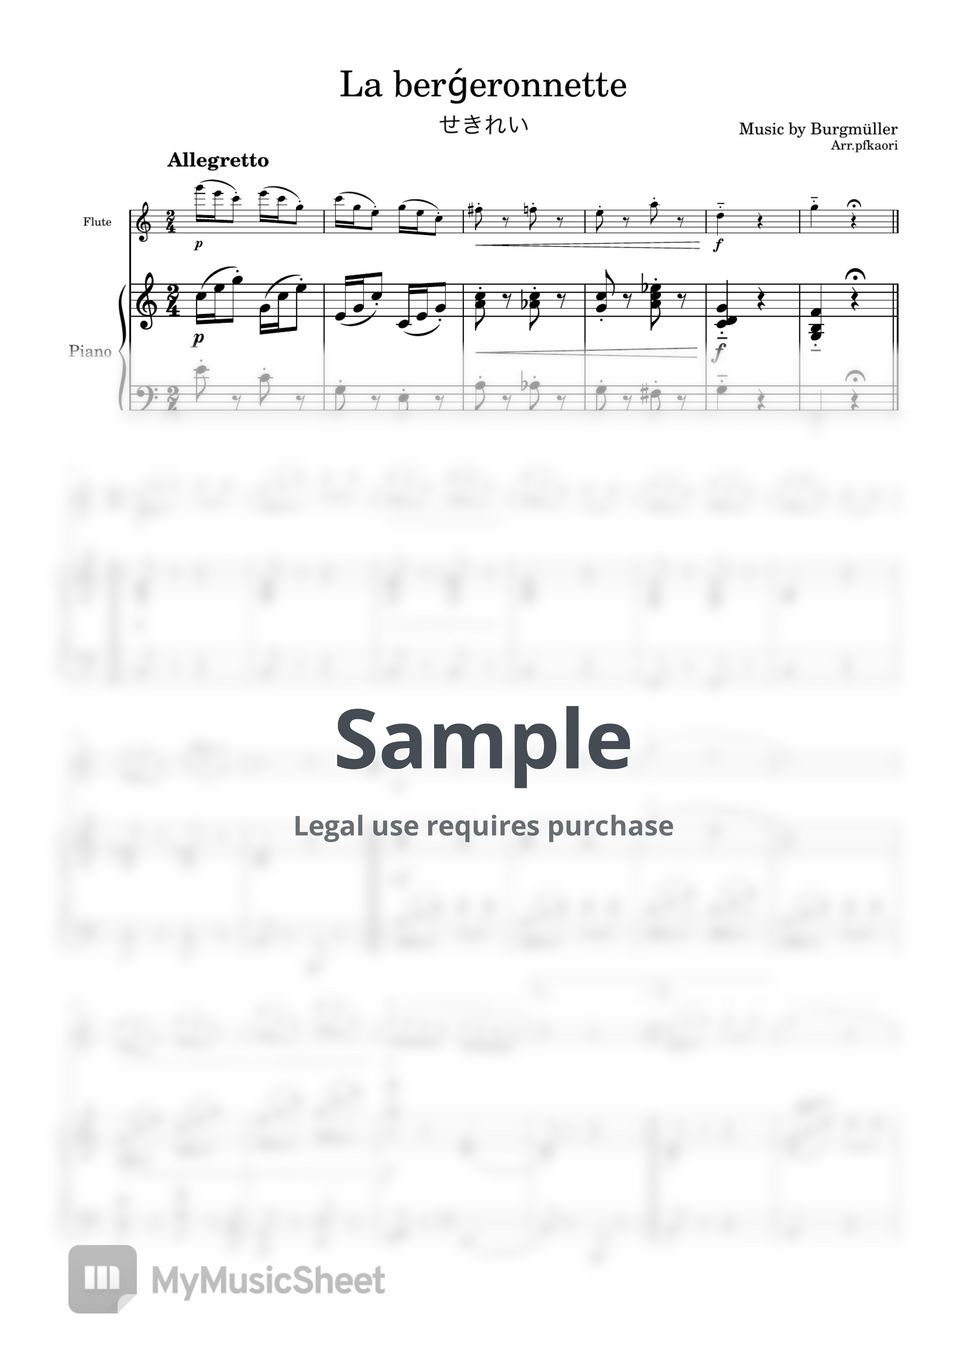 Burgmüller - La bergeronnette (flute & piano) by pfkaori